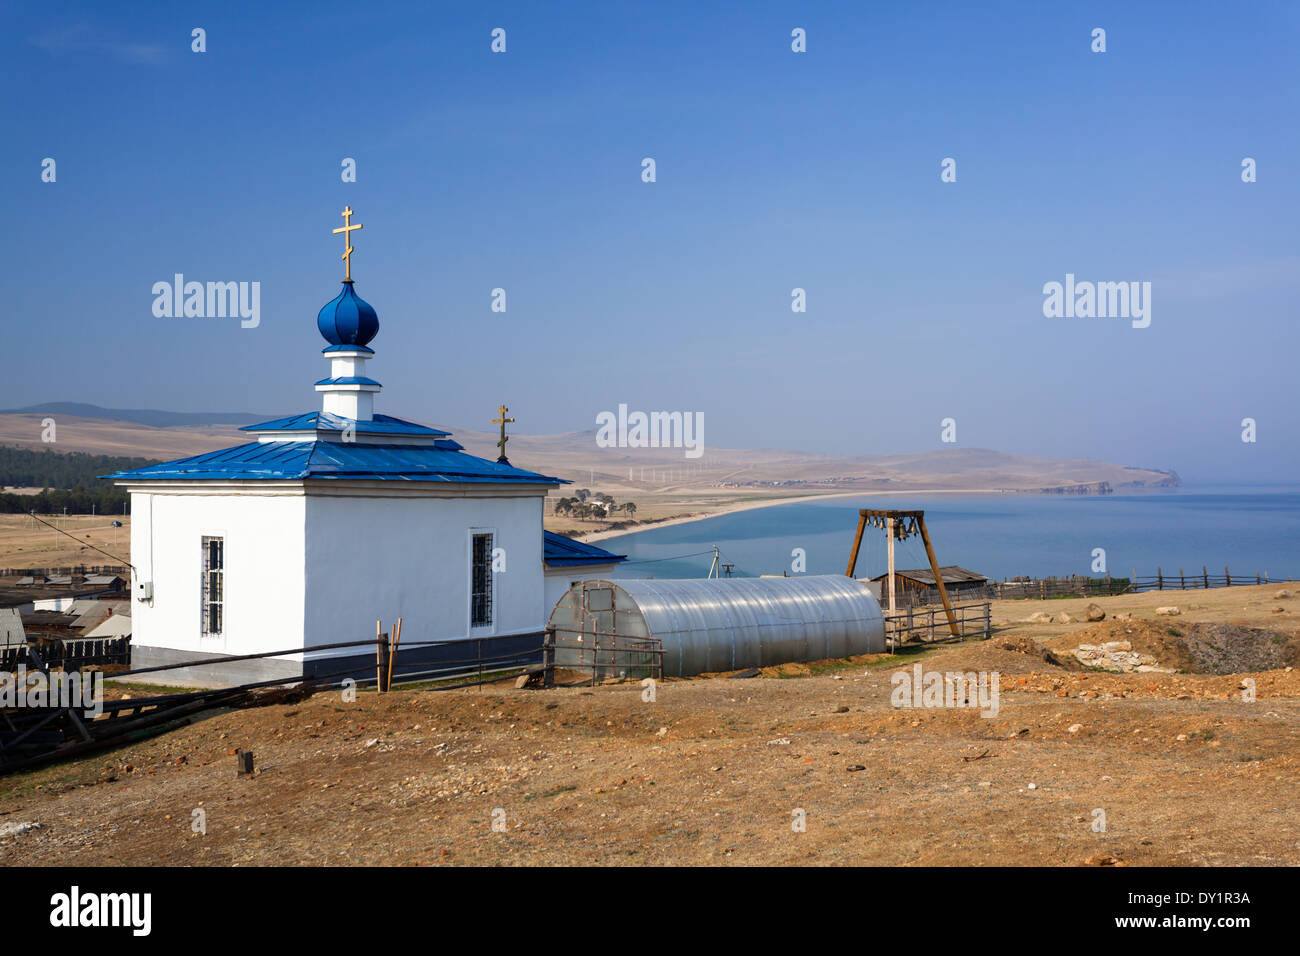 Church of Russian Orthodox Church with blue onion dome, Khuzhir, Olkhon Island, Lake Baikal, Russia Stock Photo